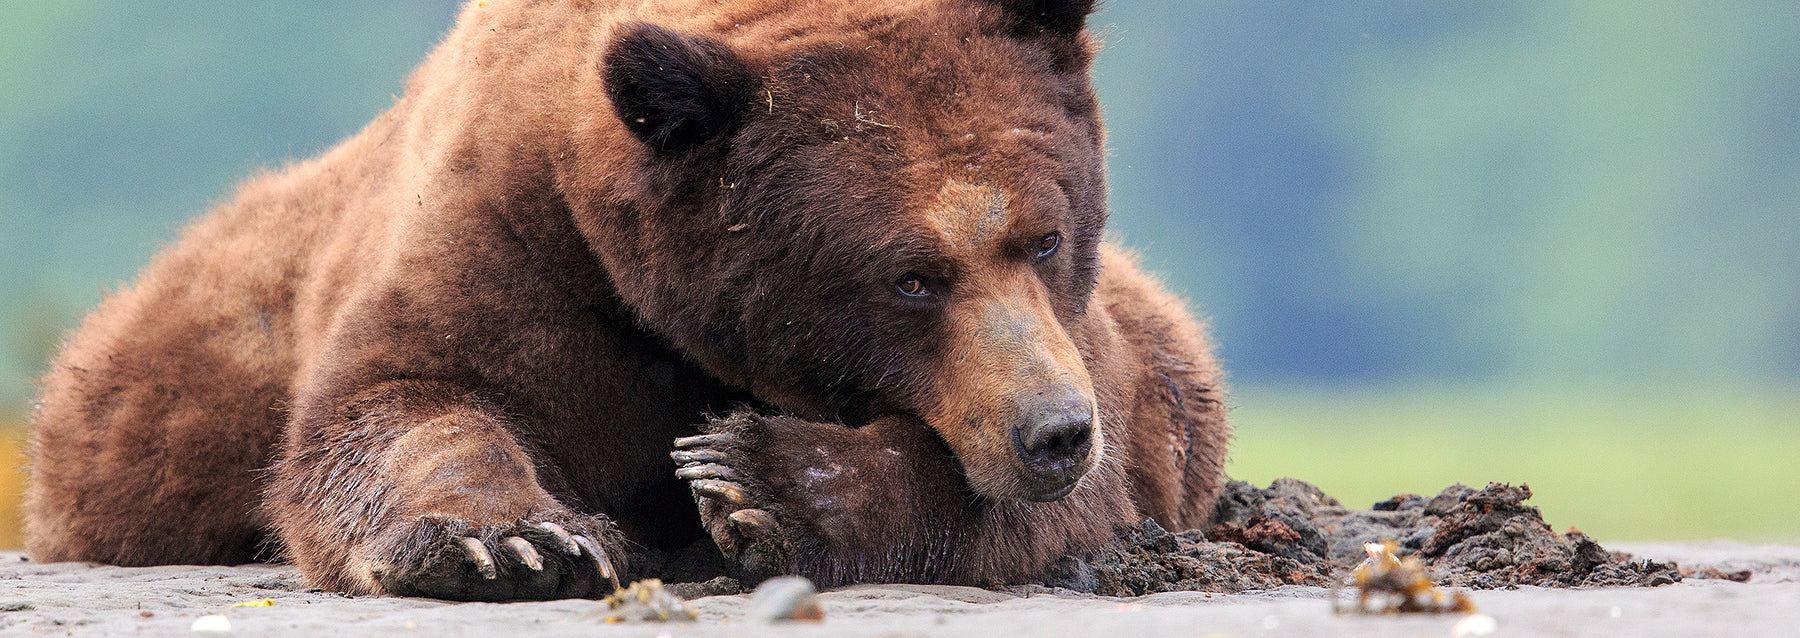 Grizzly bear photography - Frank the Tank - John E. Marriott